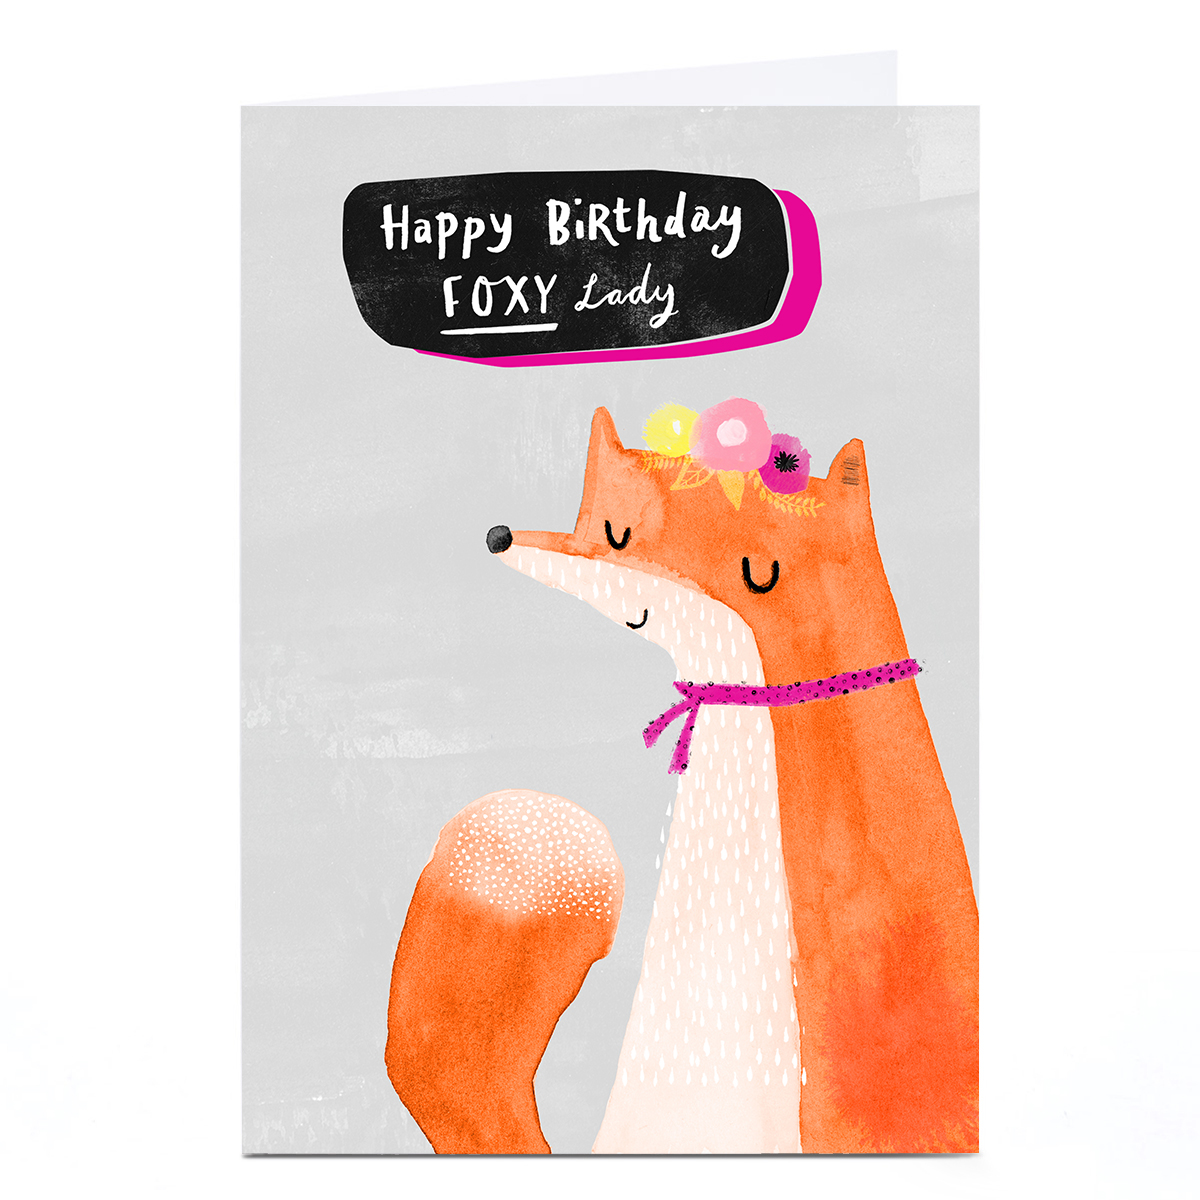 Personalised Andrew Thornton Birthday Card - Foxy Lady